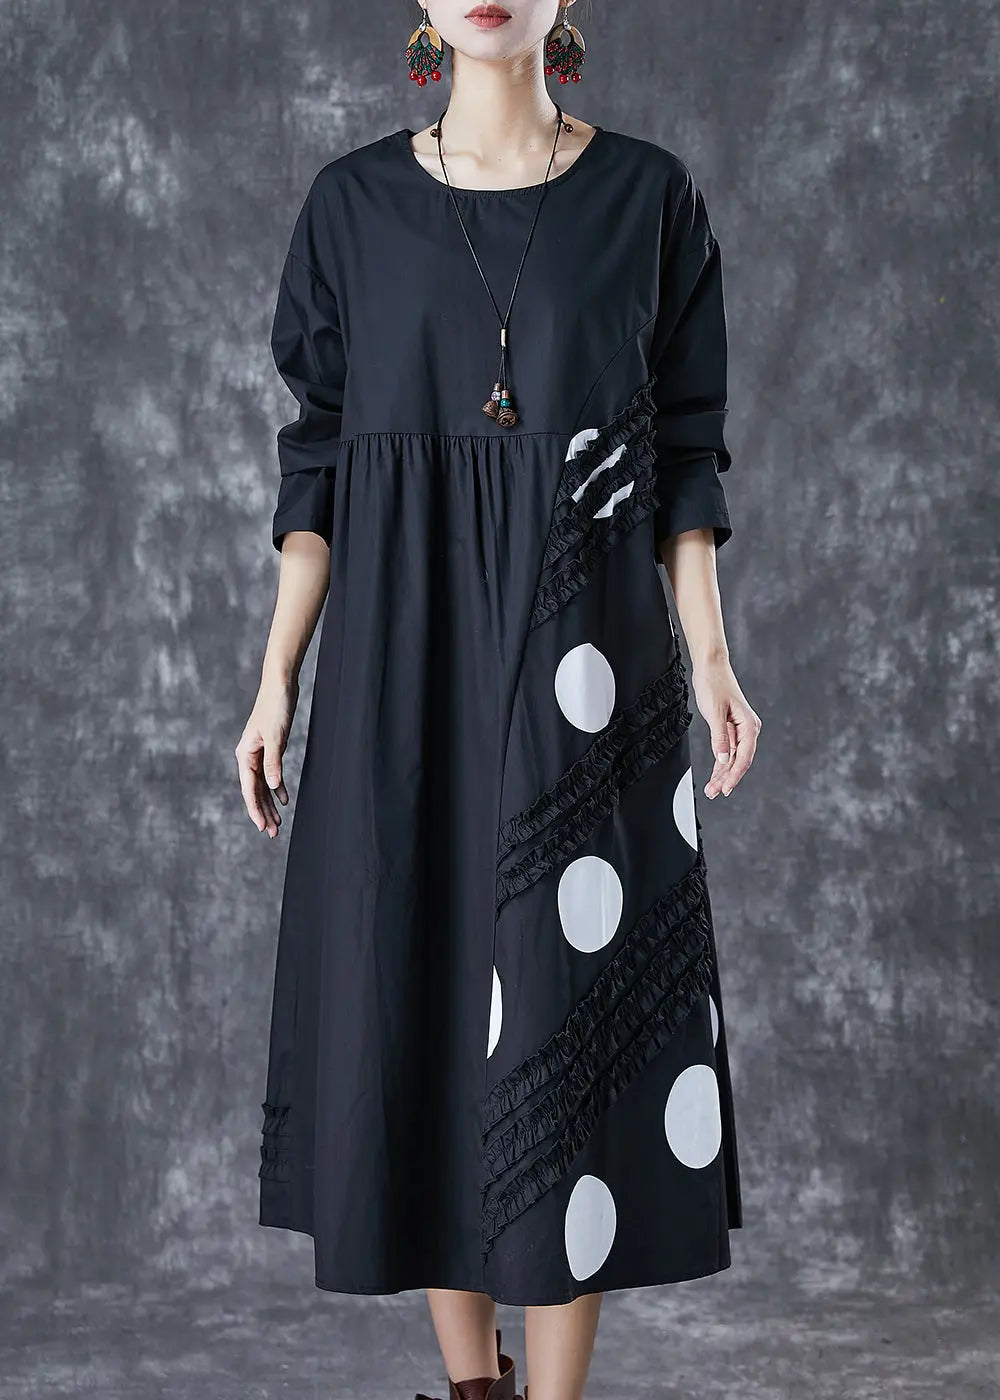 Style Black Ruffled Patchwork Cotton Dress Spring Ada Fashion